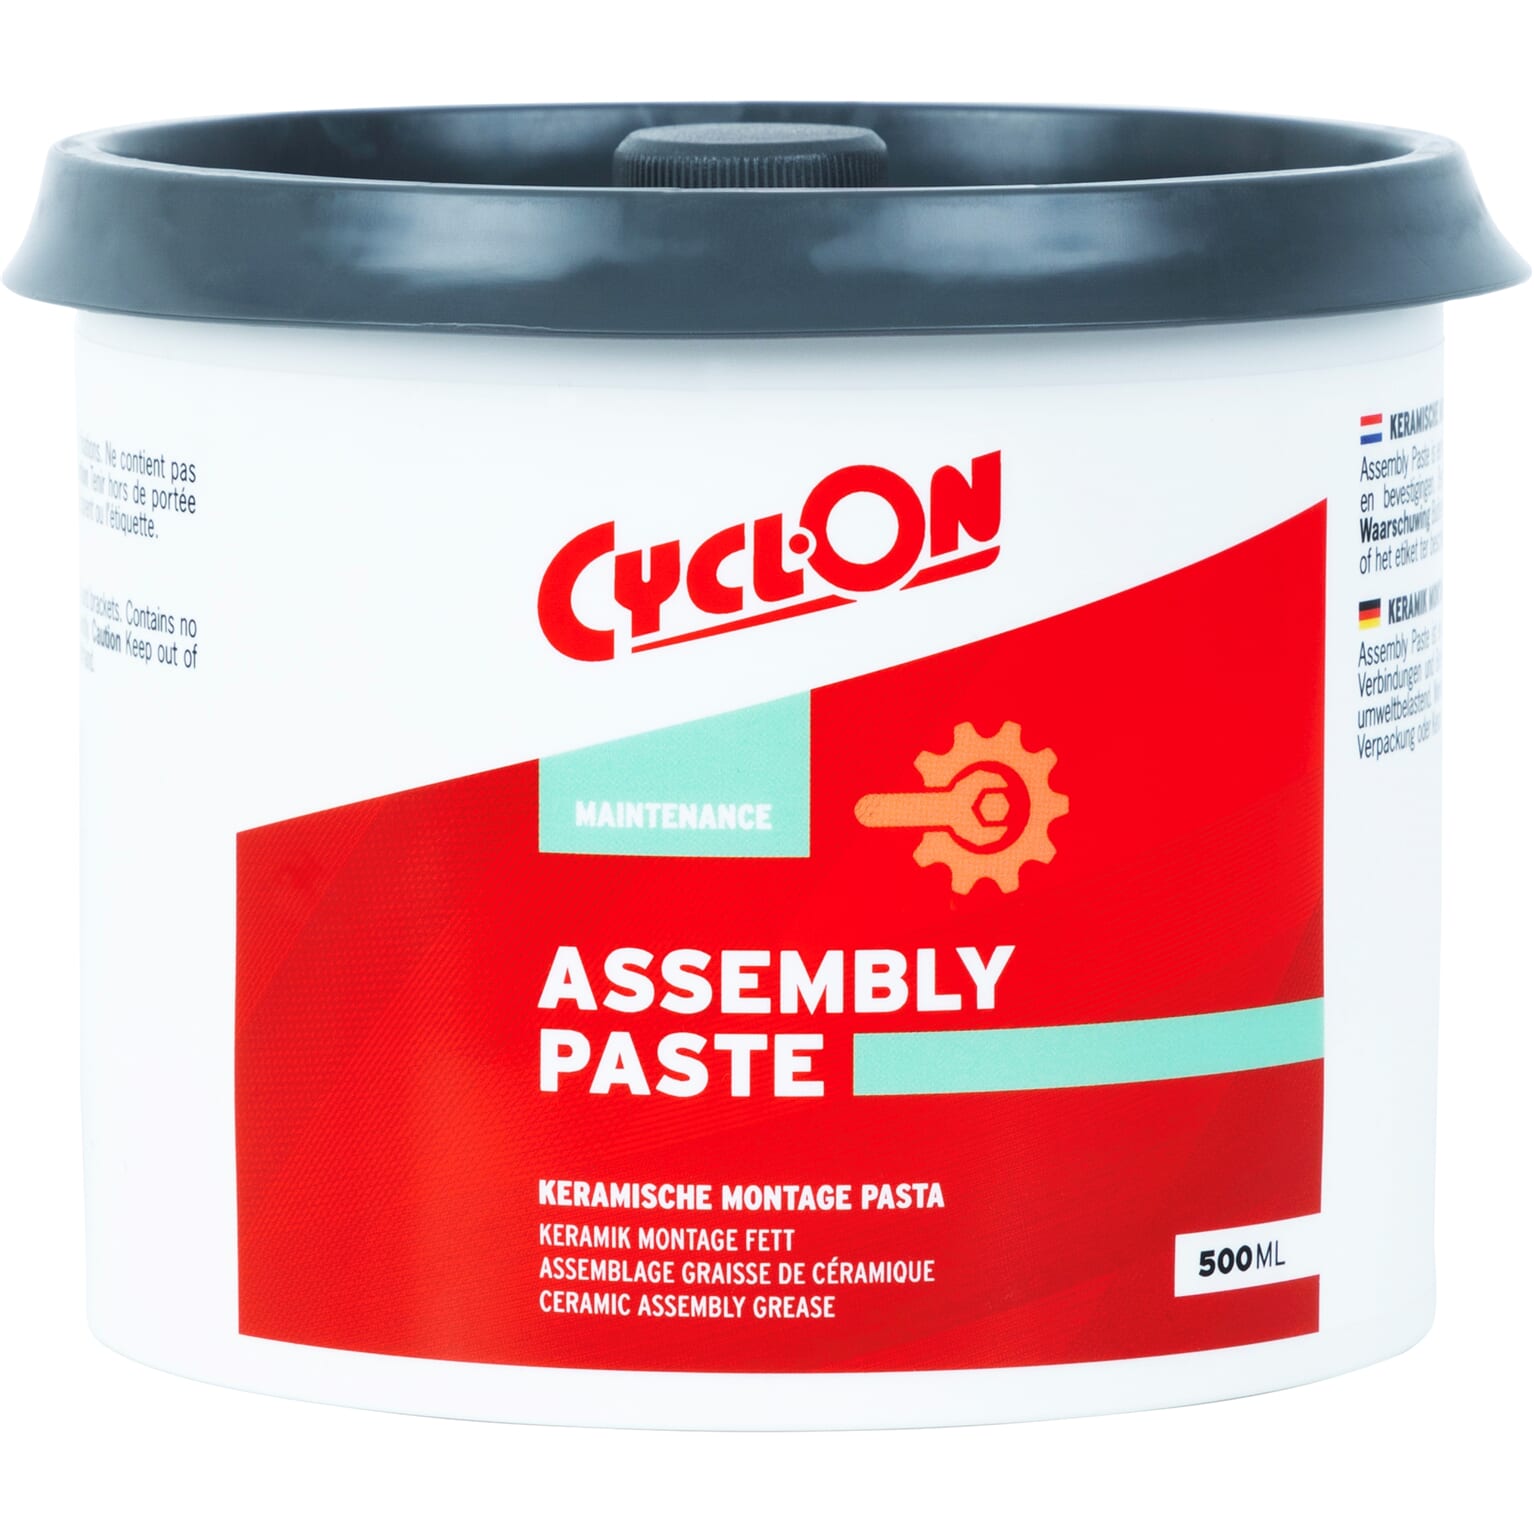 Pot mounting paste cyclon 500ml